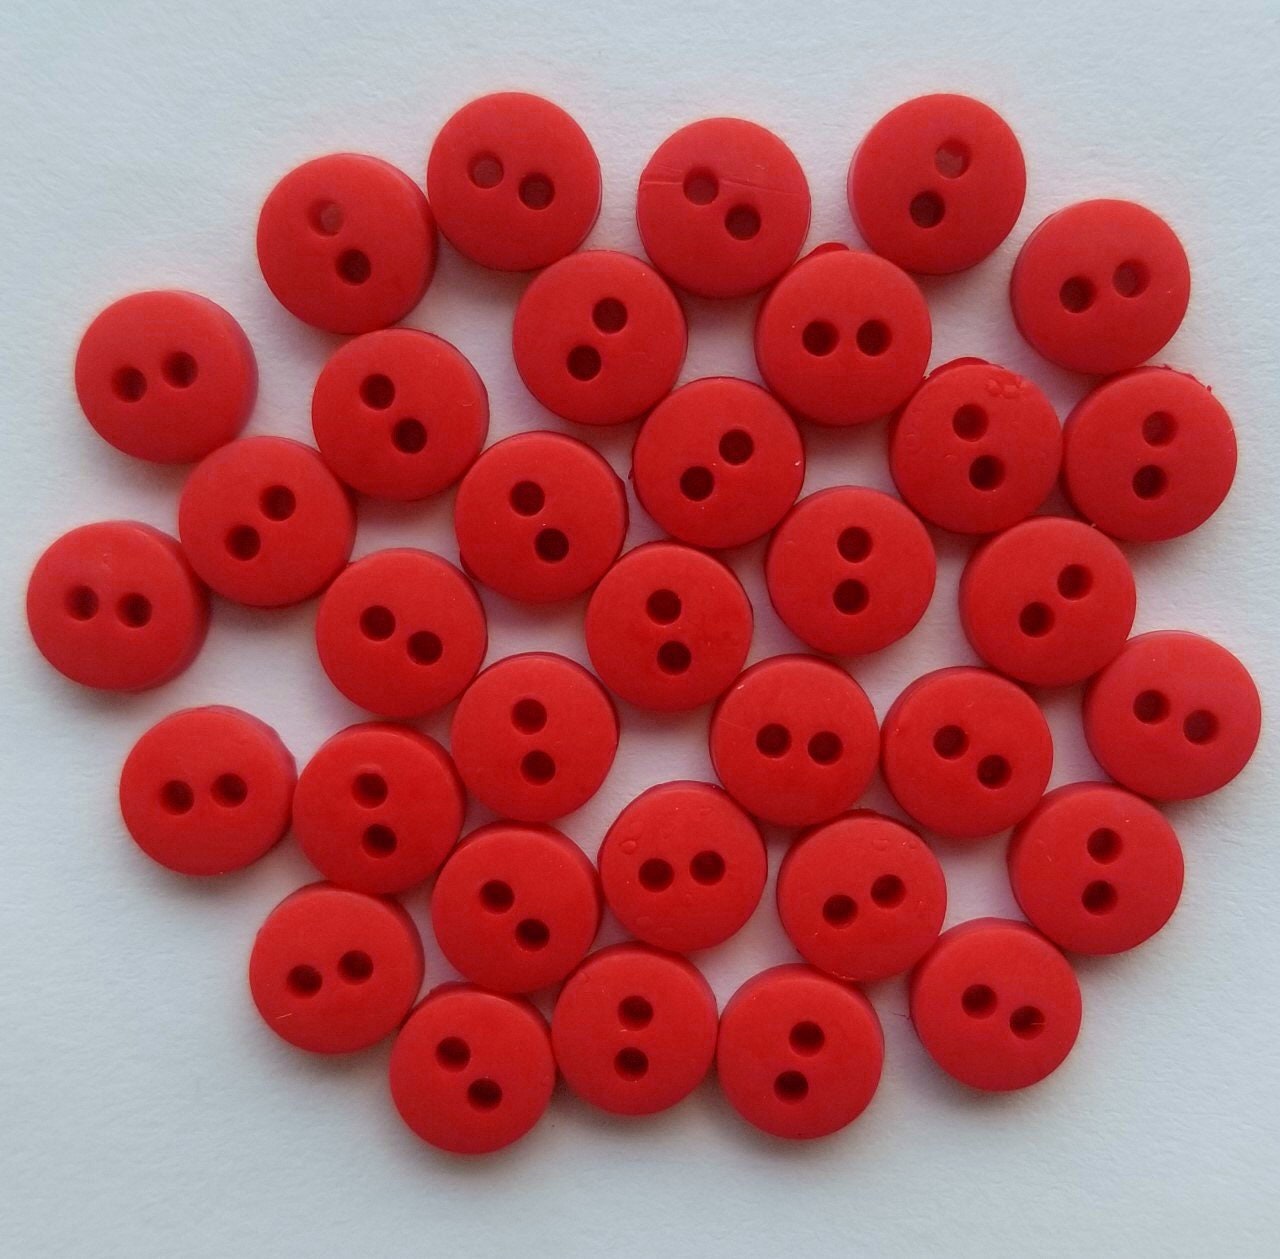 Tiny Red Buttons  jeromethomasdesigns